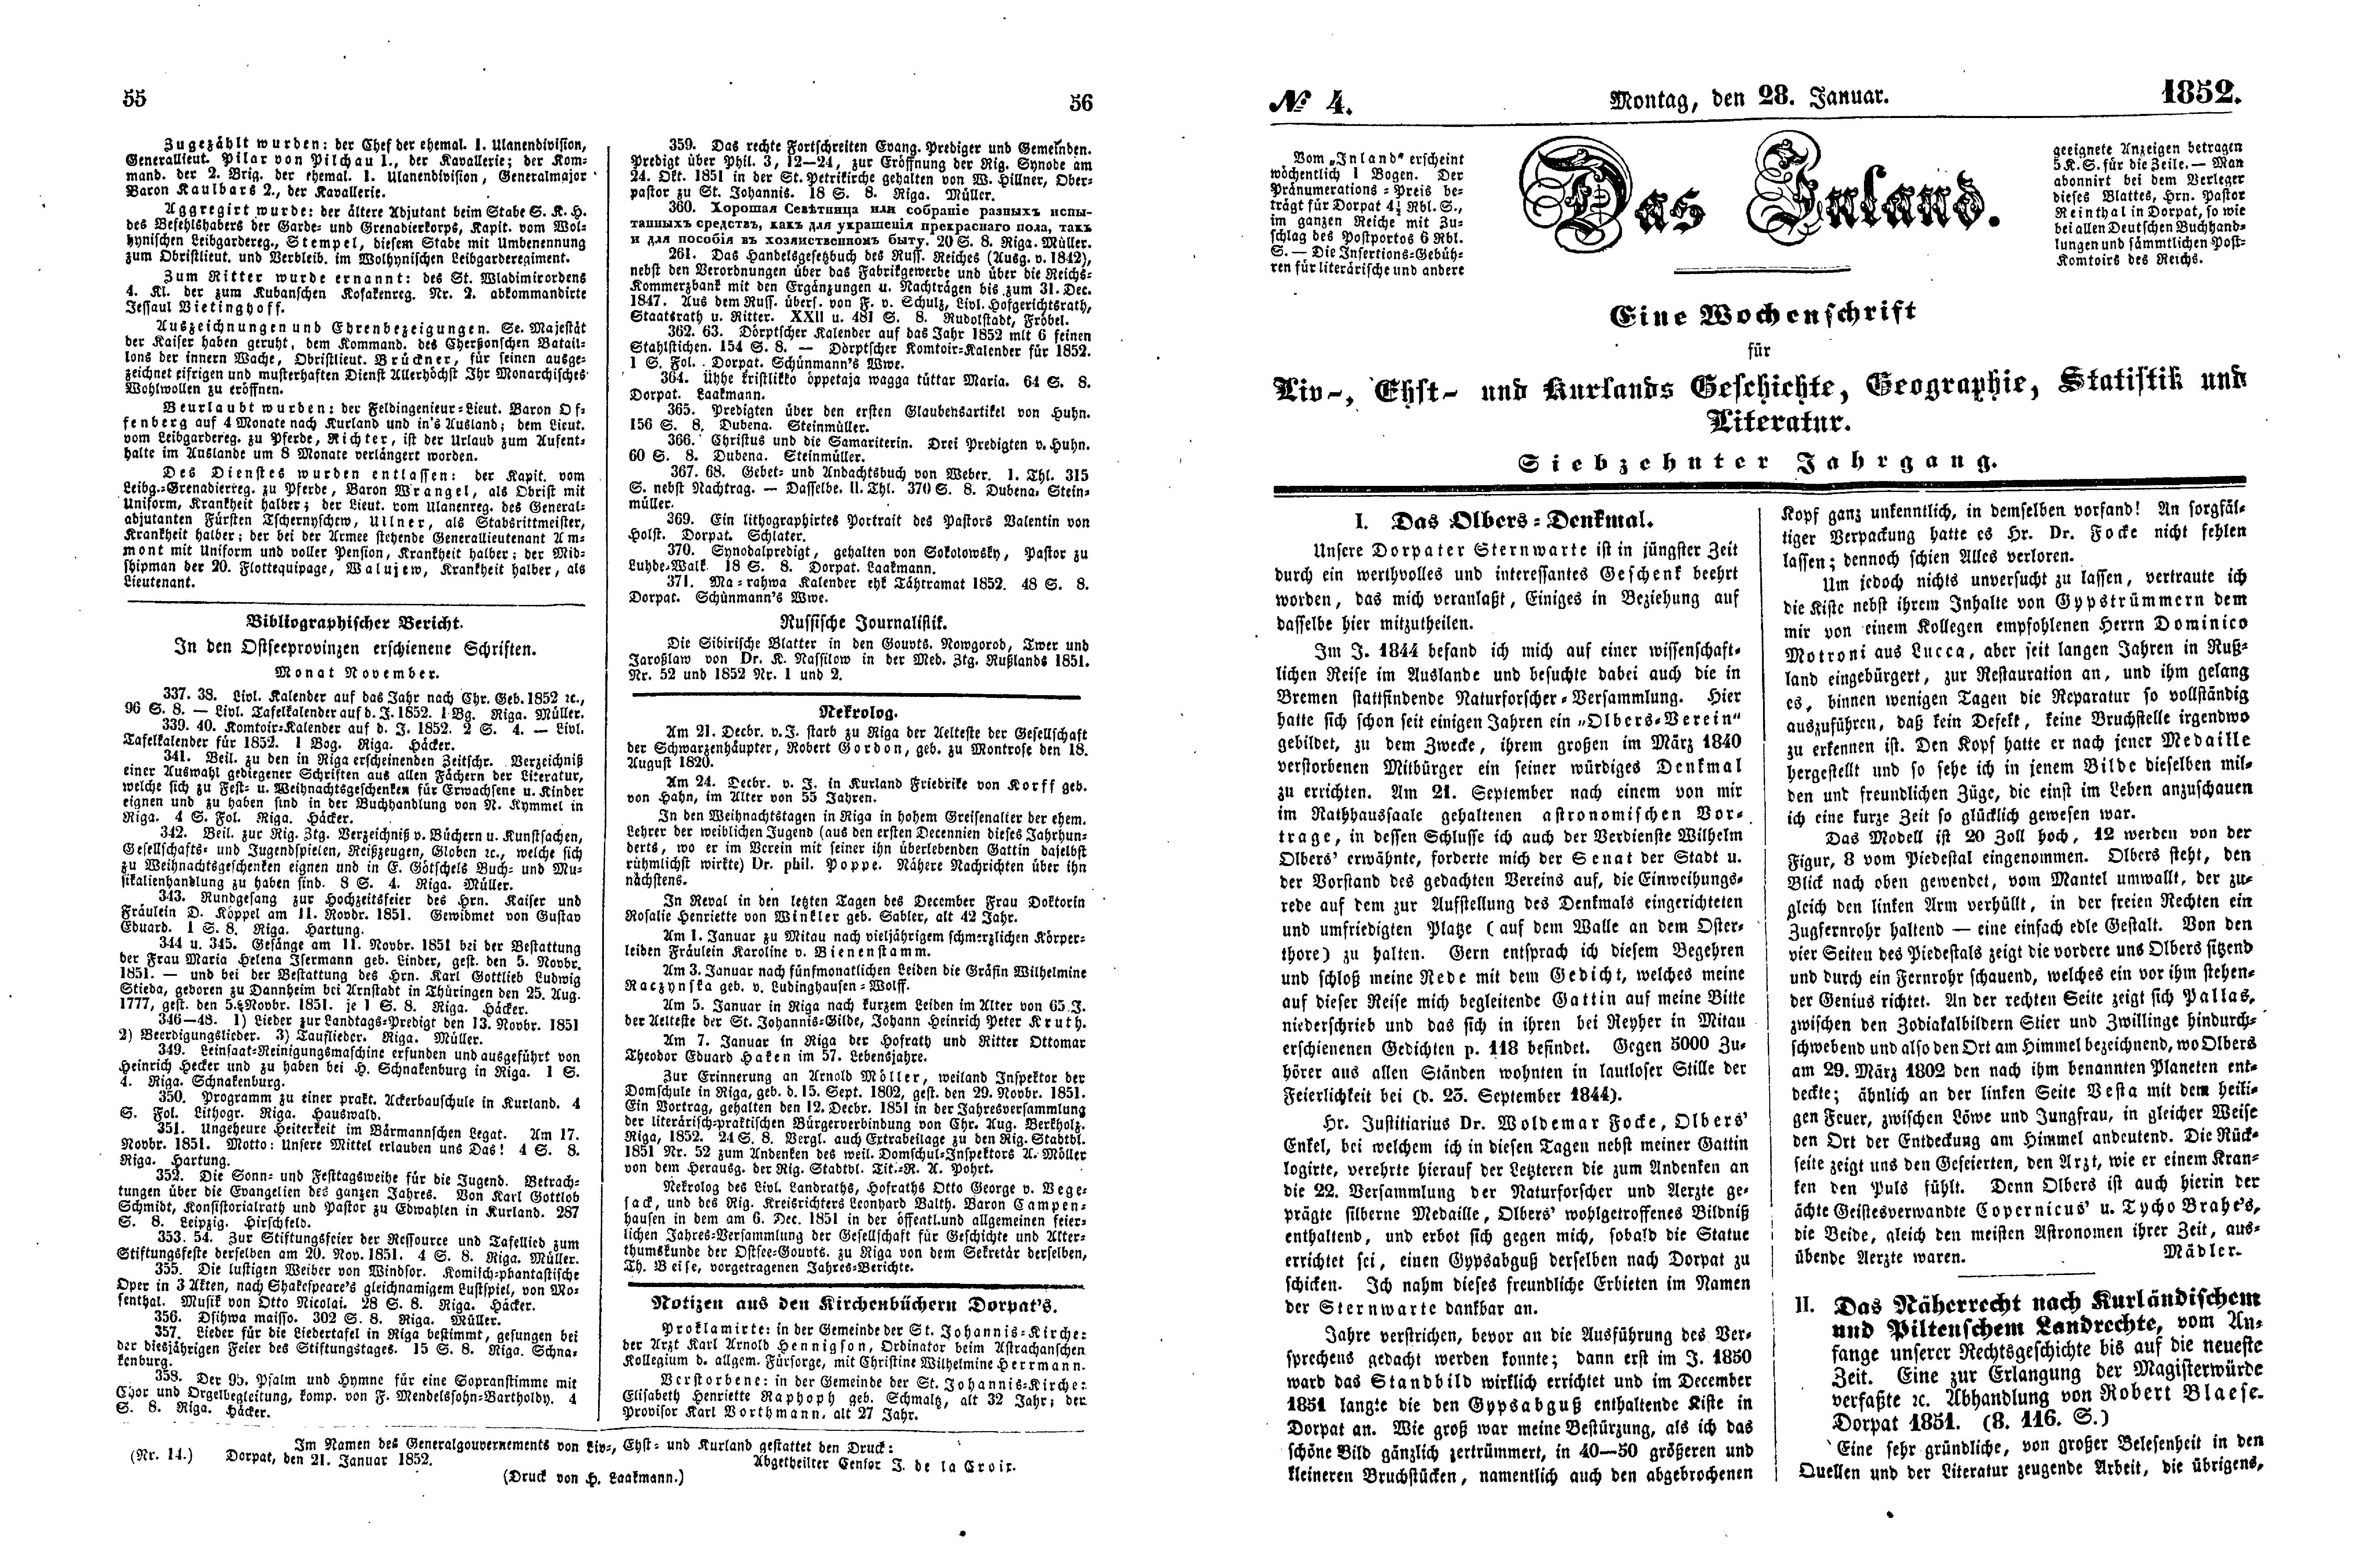 Das Inland [17] (1852) | 18. (55-58) Main body of text